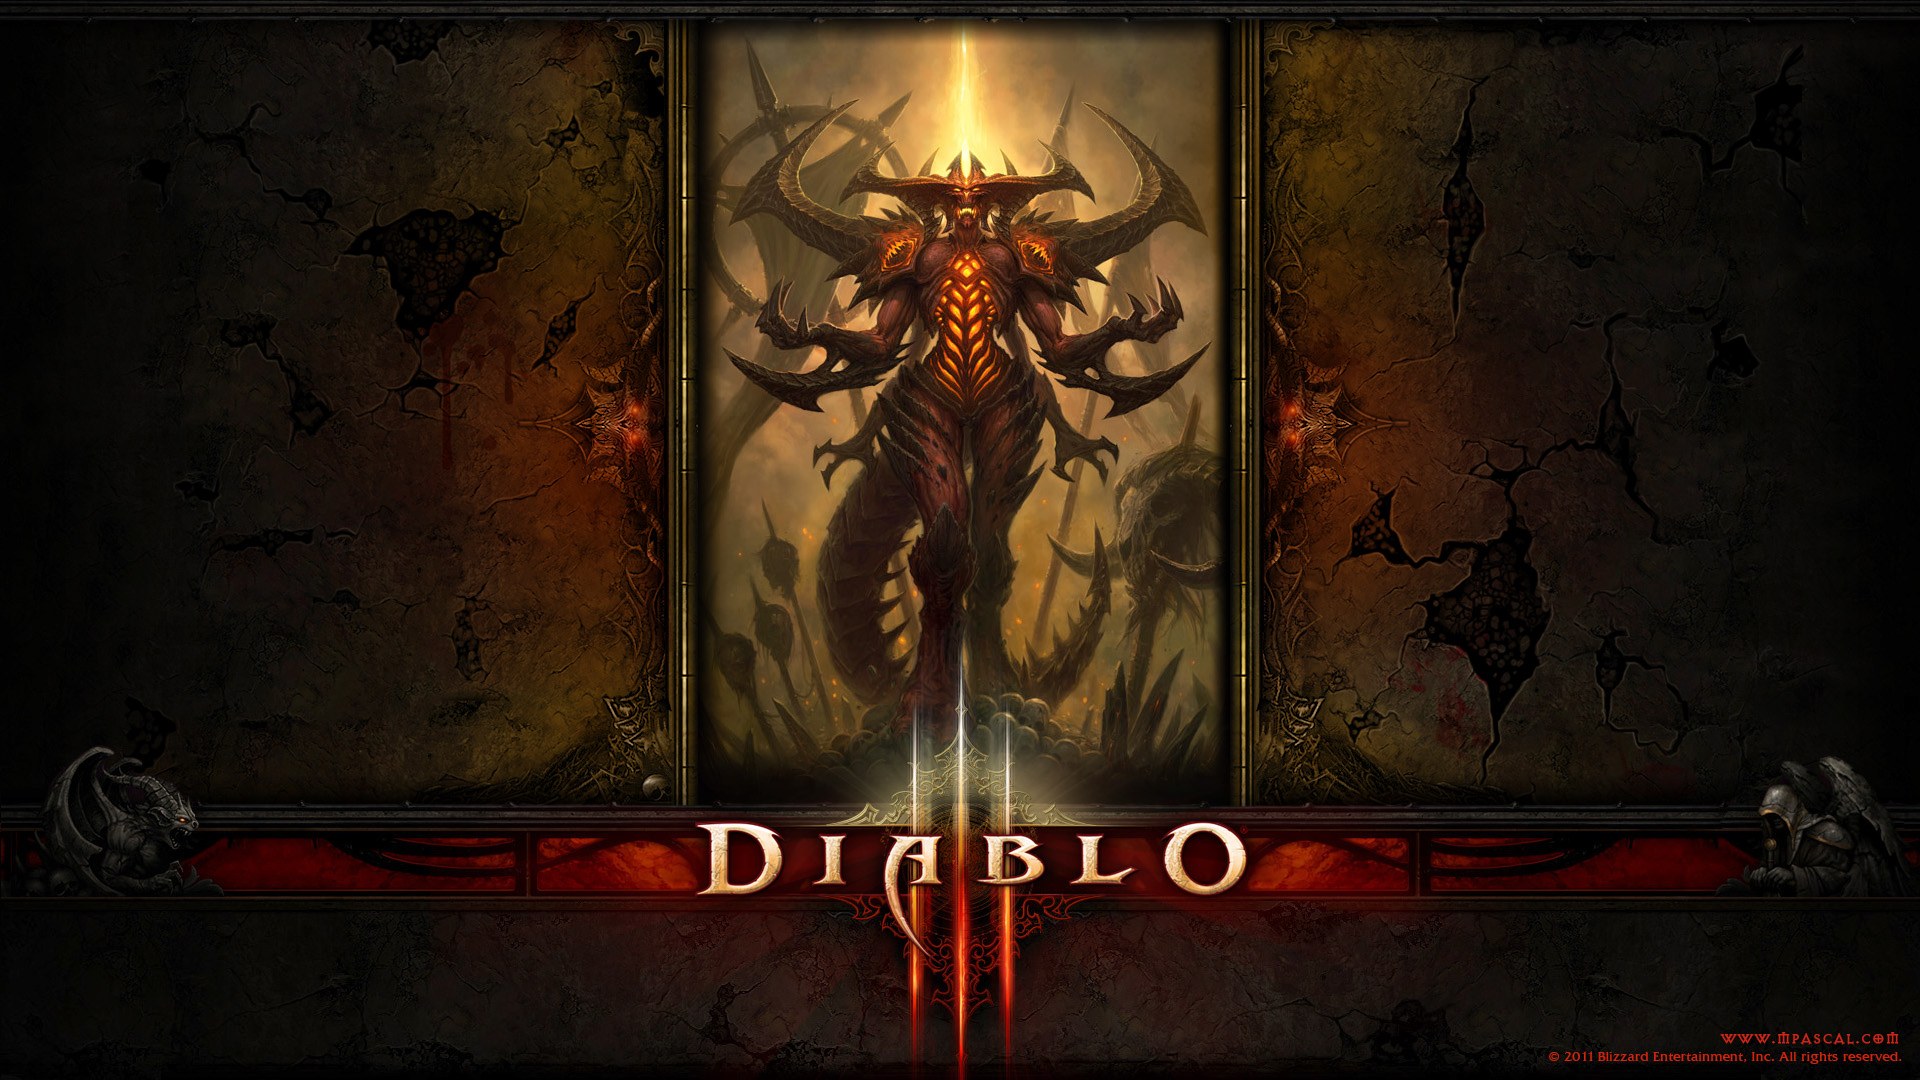 Amazing Diablo III Pictures & Backgrounds